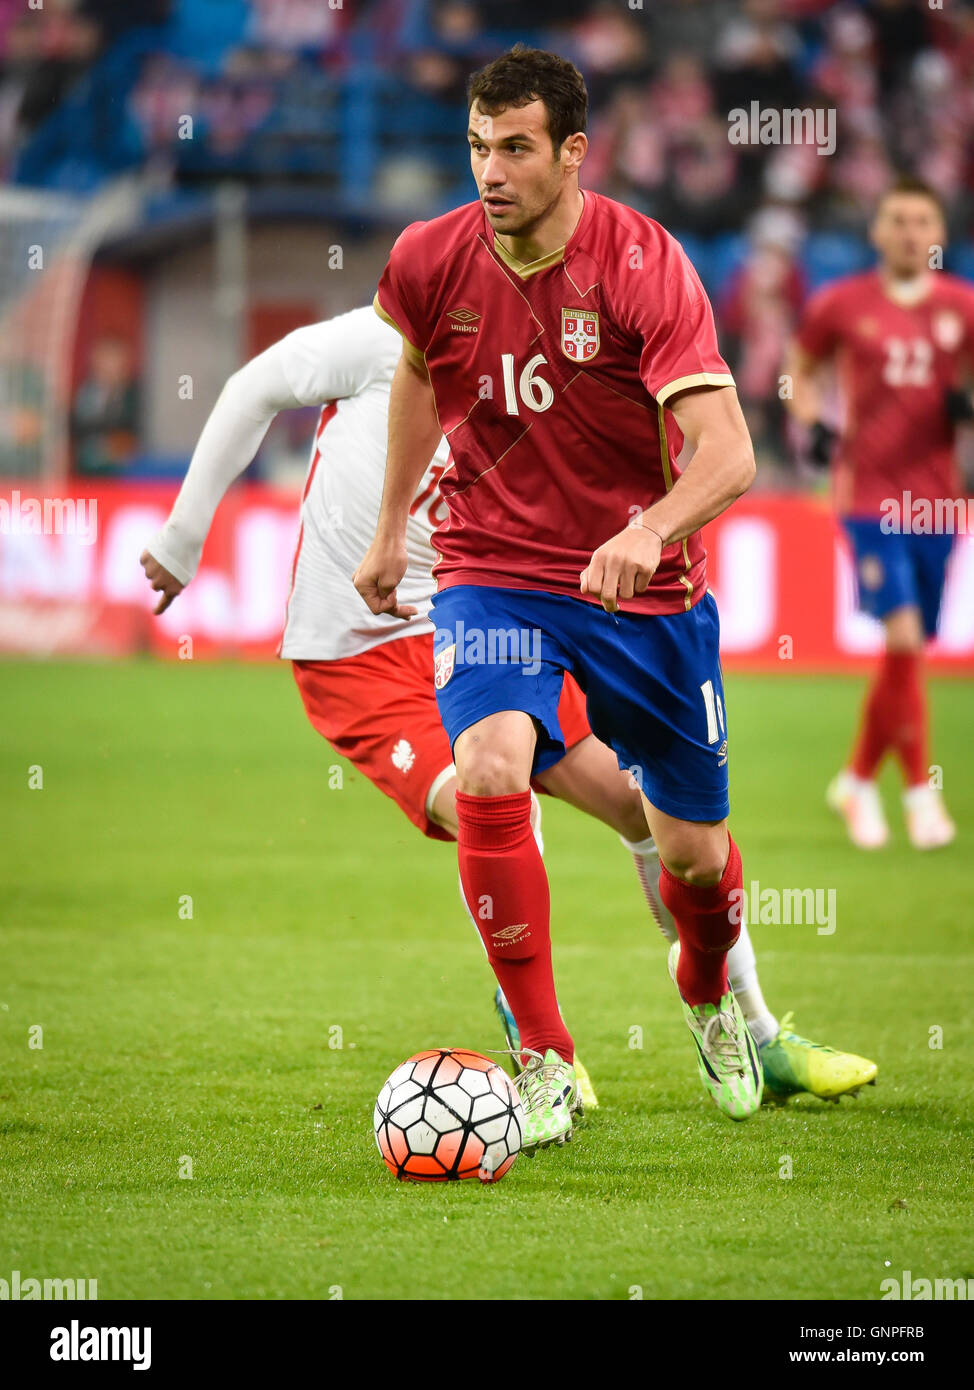 Posen, Polen - 23. März 2016: Luka Milivojevic in Aktion während internationaler Fußball Freundschaftsspiel Polen Vs Serbien 1:0. Stockfoto